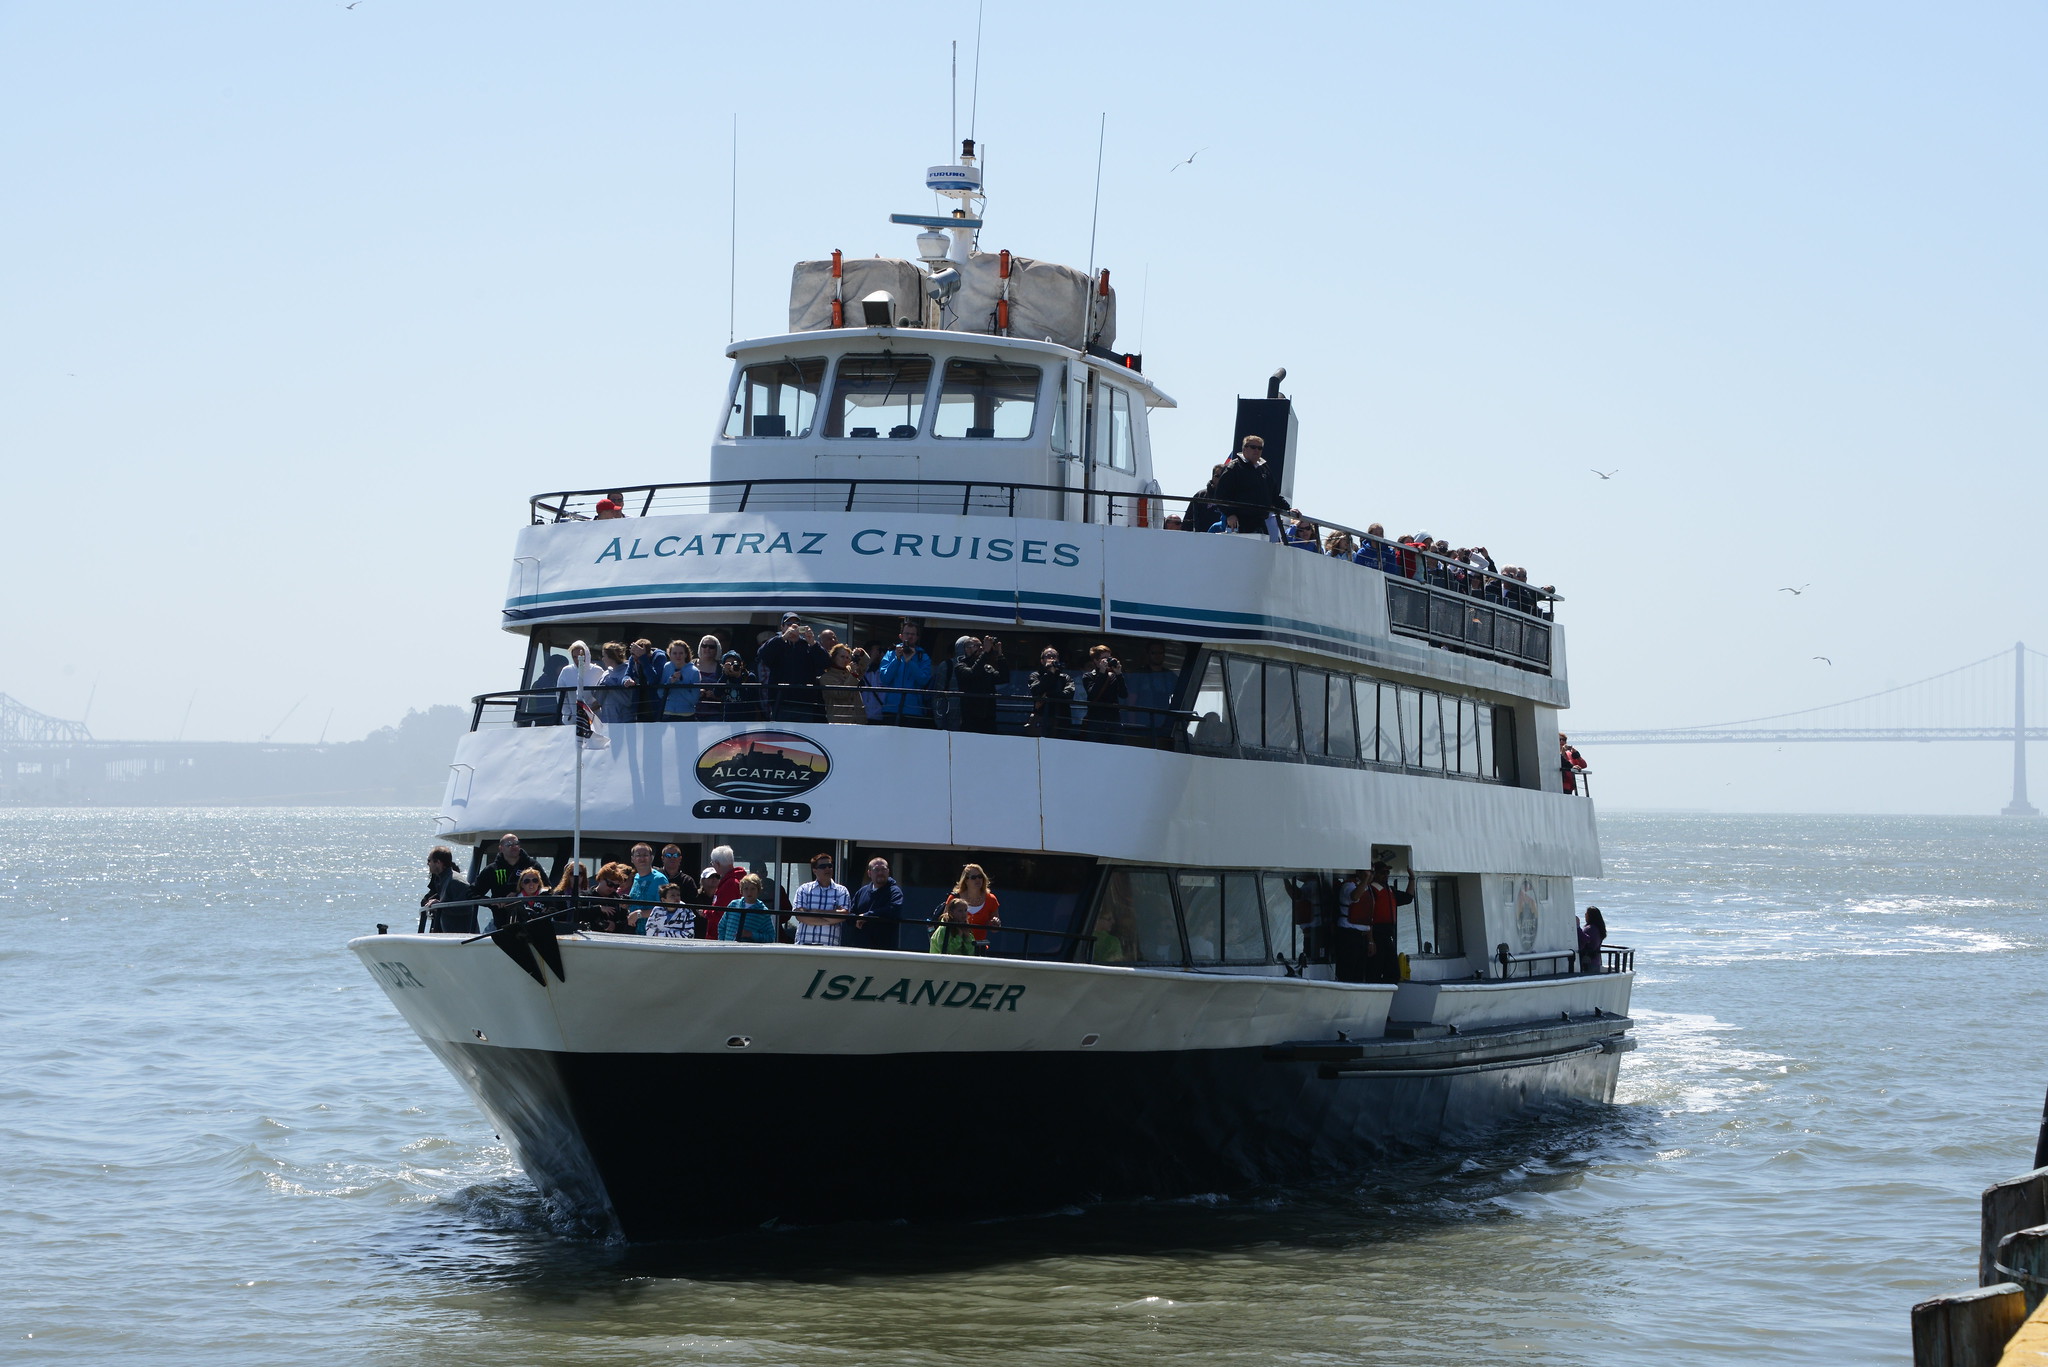 An inbound tourist boat arriving at Alcatraz